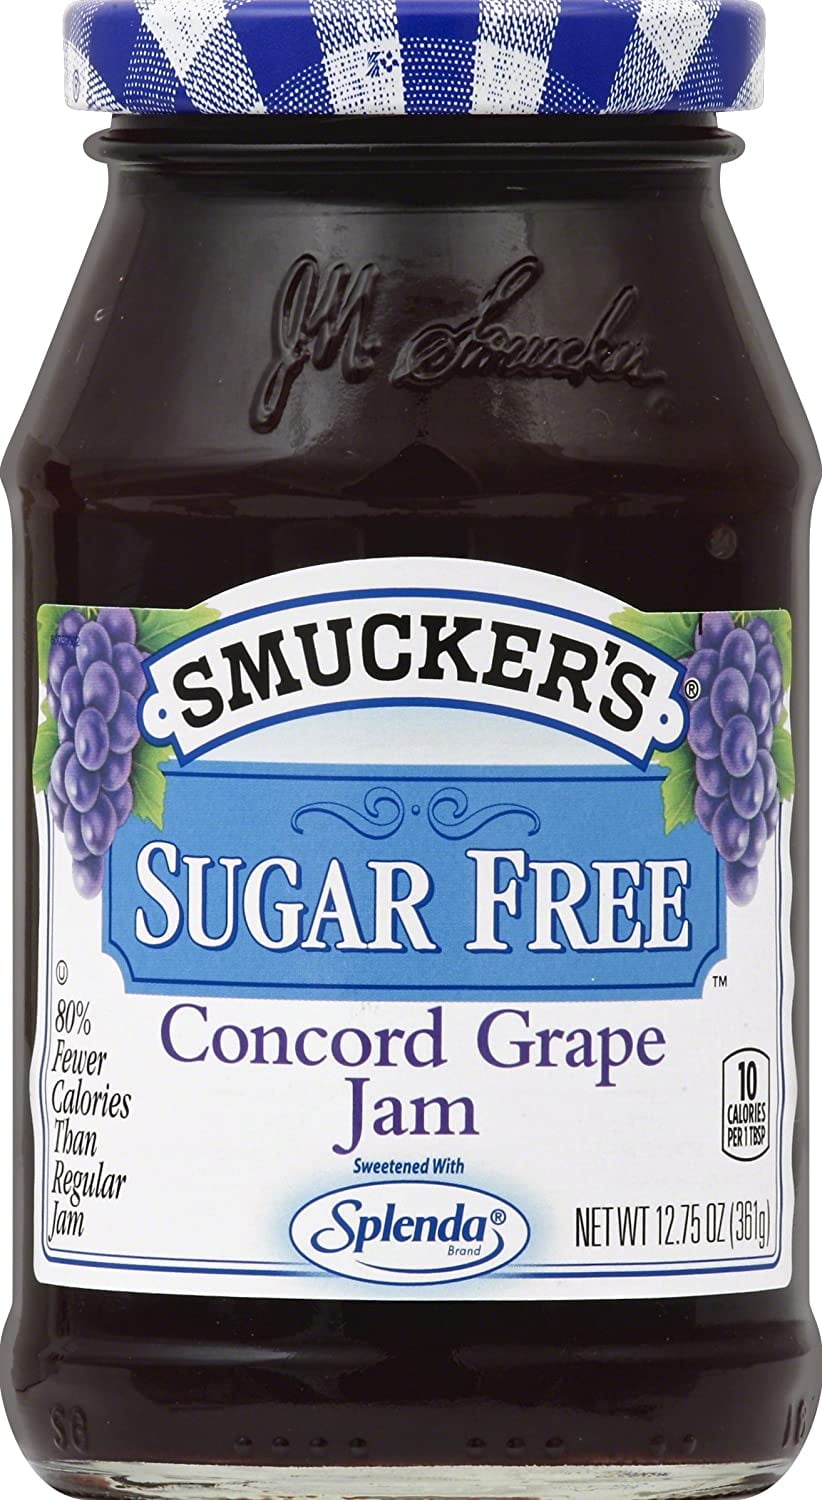 Smuckers Sugar Free Concord Grape Jam With Splenda Brand Sweetener, 12.